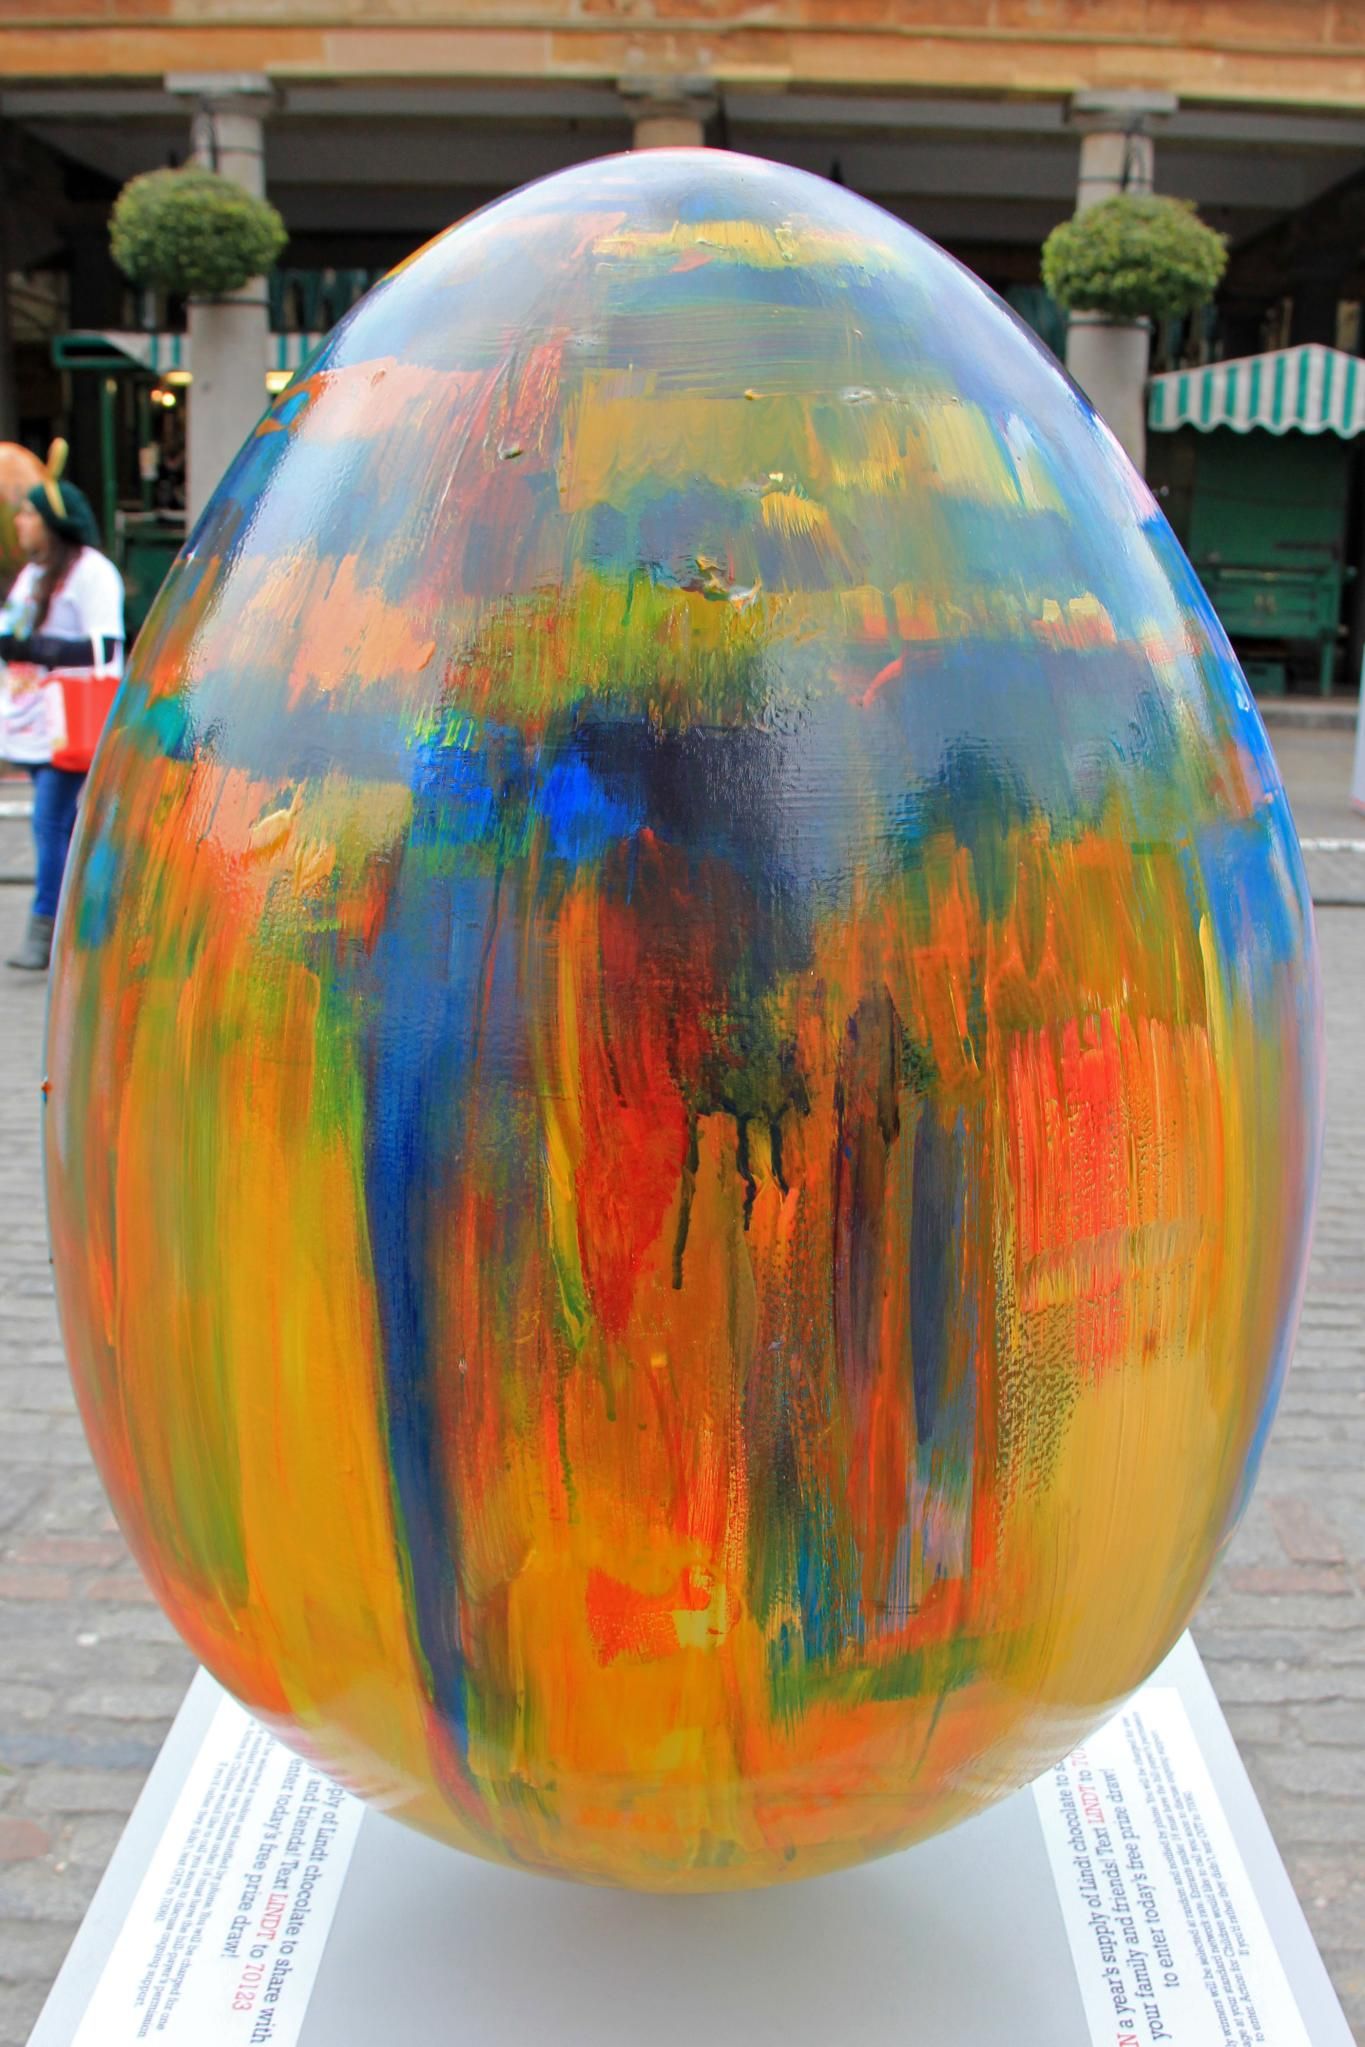 Put Giant Fried Egg Sculptures on Your Global Art Bucket List